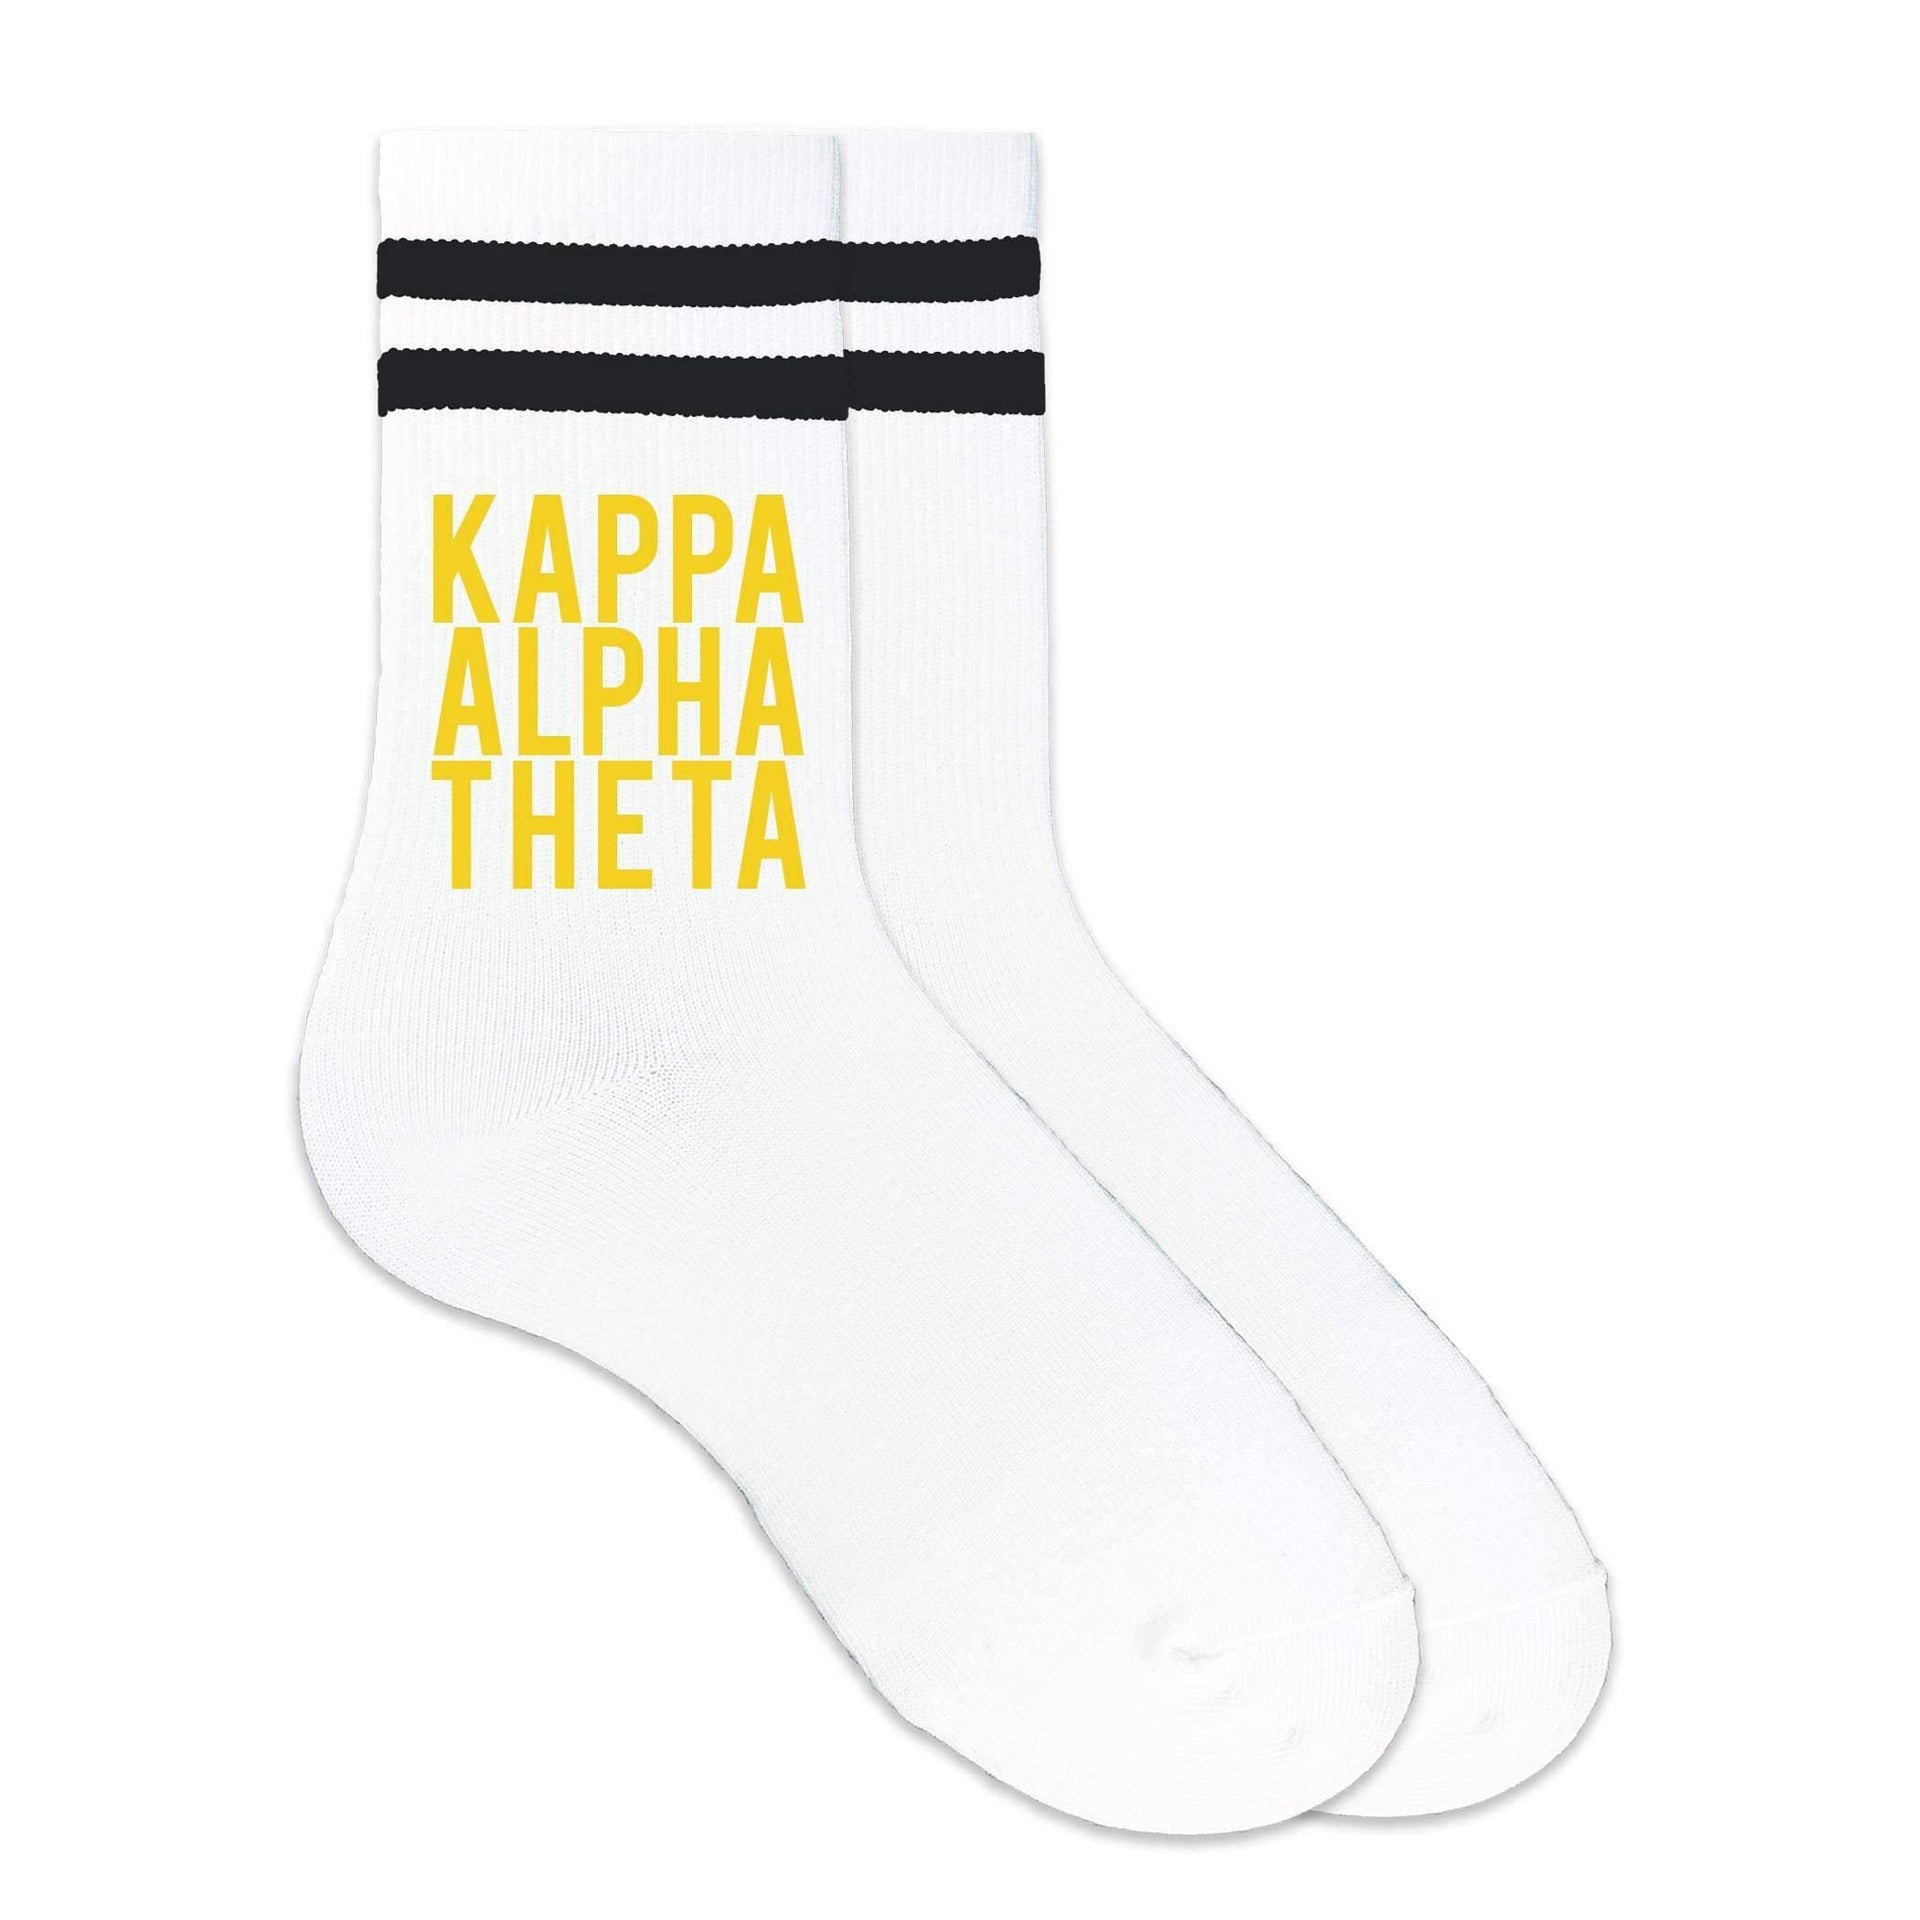 Kappa Alpha Theta custom printed in sorority colors on black striped crew socks